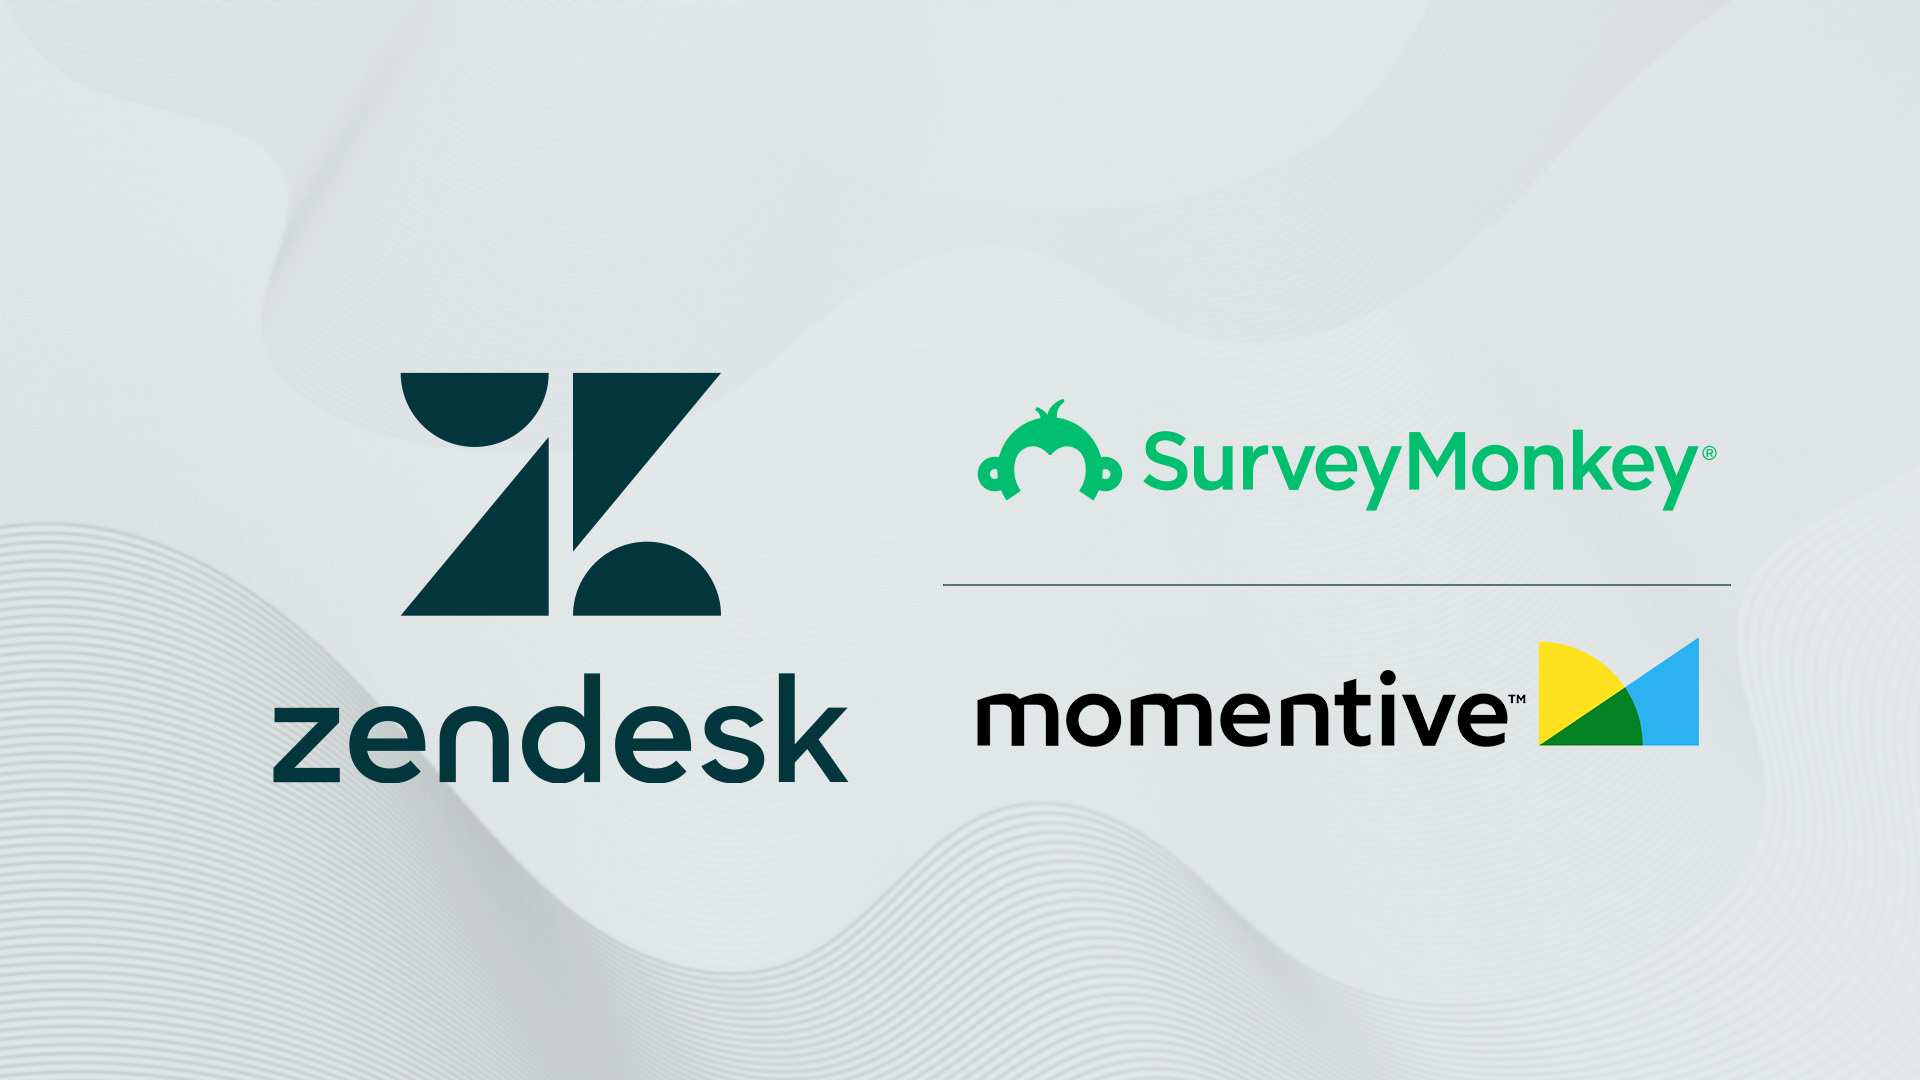 Zendesk to acquire Momentive and SurveyMonkey Platform